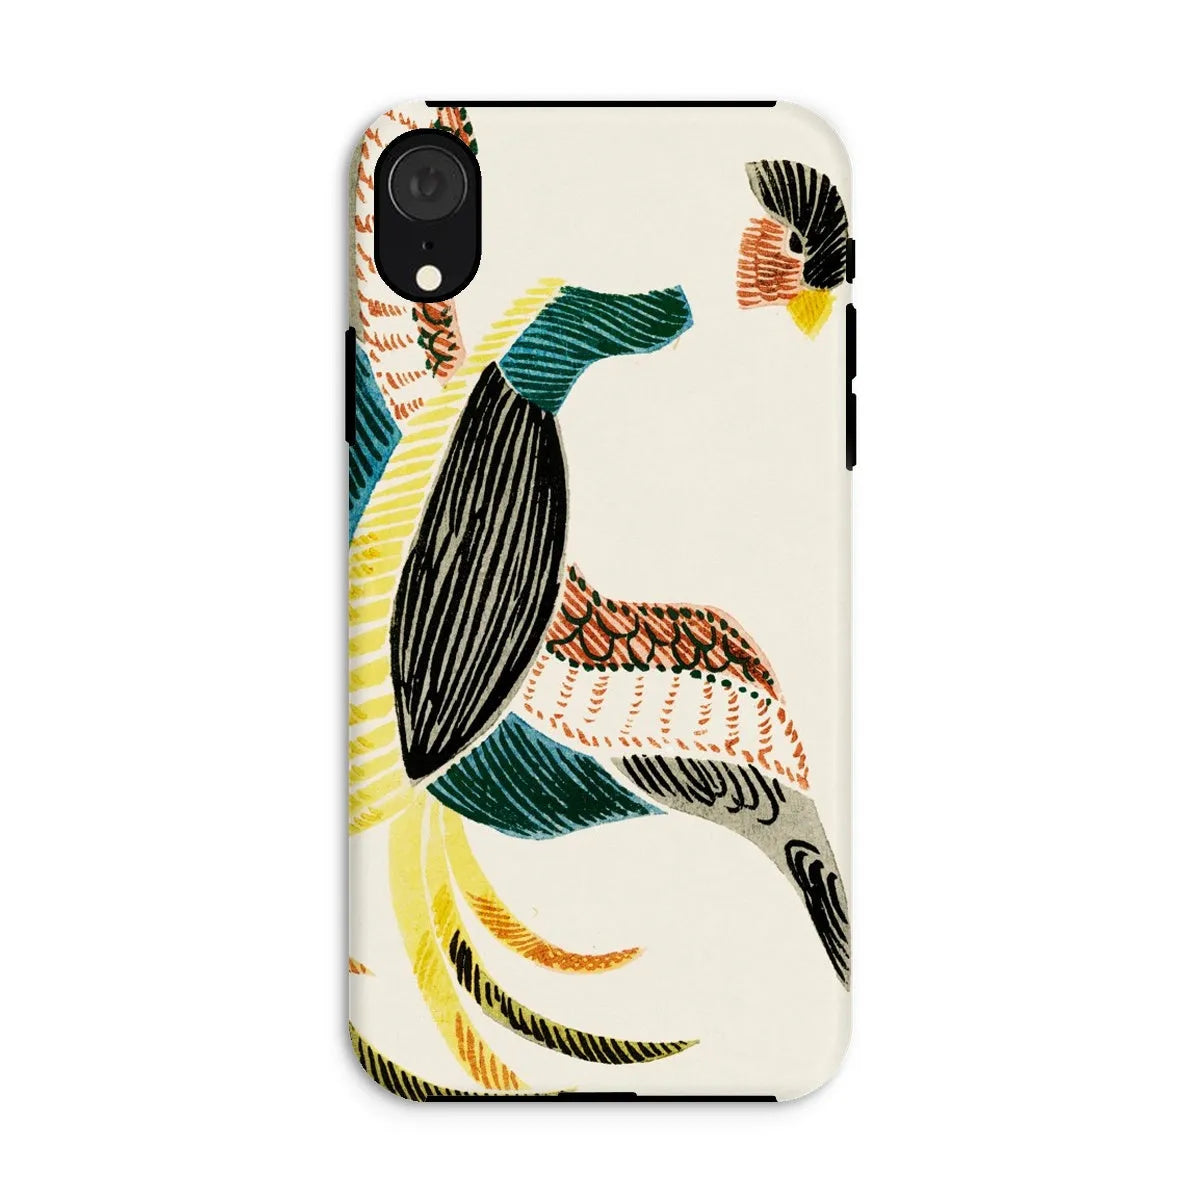 Woodblock Crane - Japanese Bird Phone Case - Taguchi Tomoki - Iphone Xr / Matte - Mobile Phone Cases - Aesthetic Art